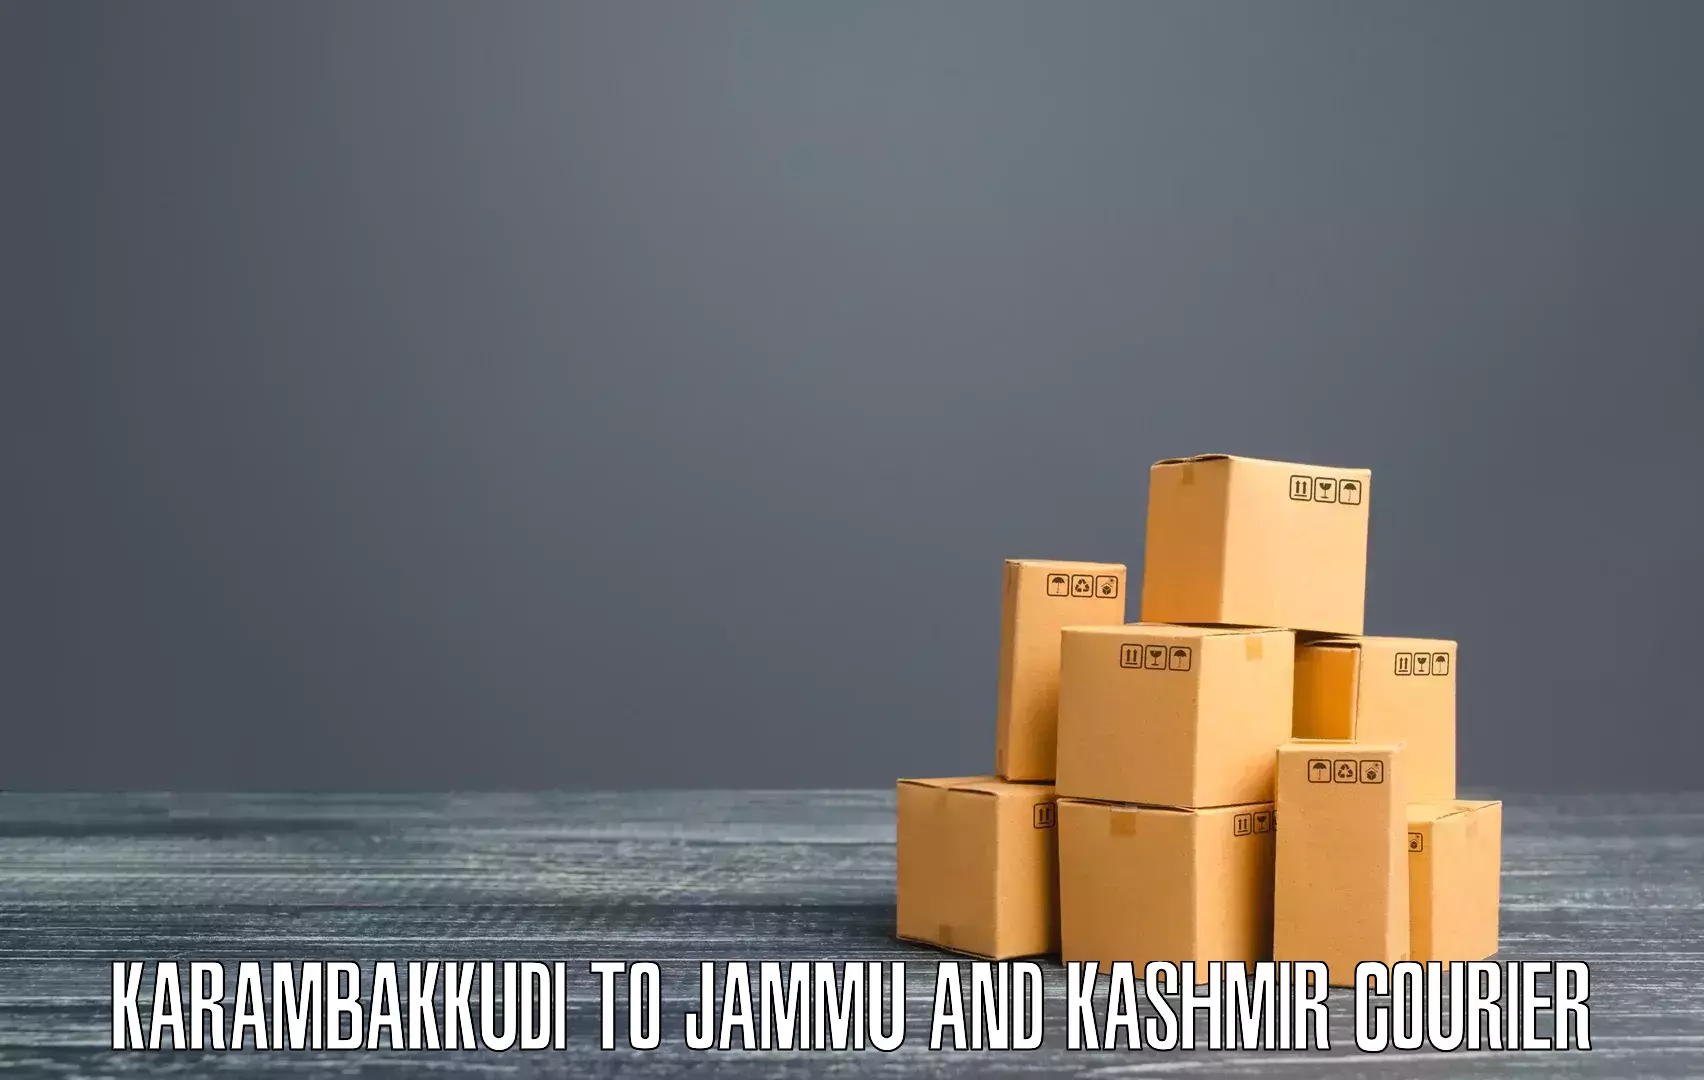 Logistics and distribution Karambakkudi to IIT Jammu